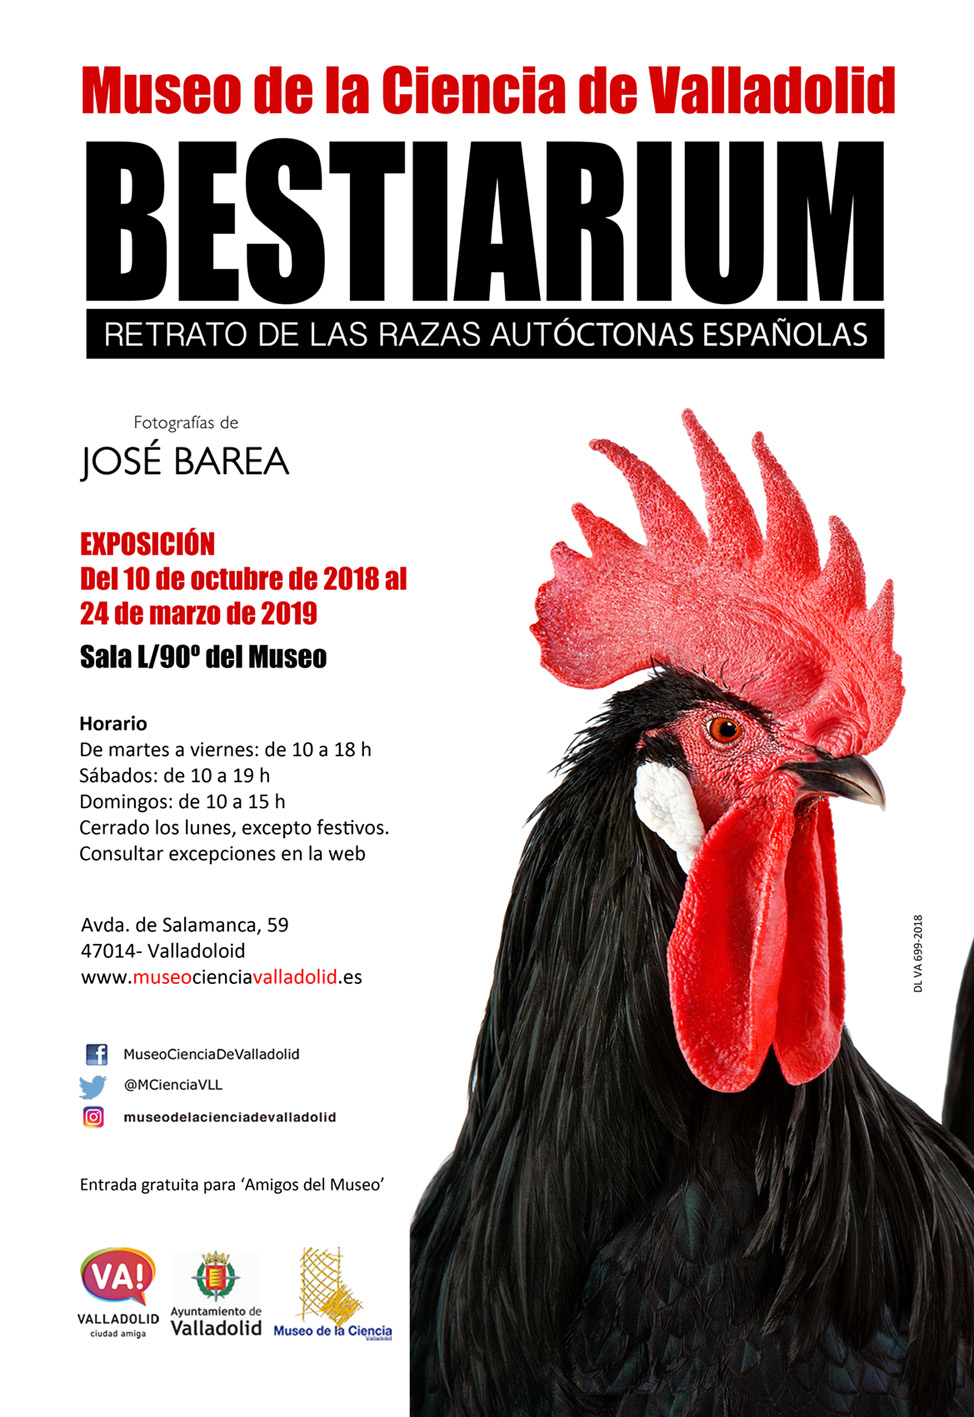 Bestiarium-Valladolid